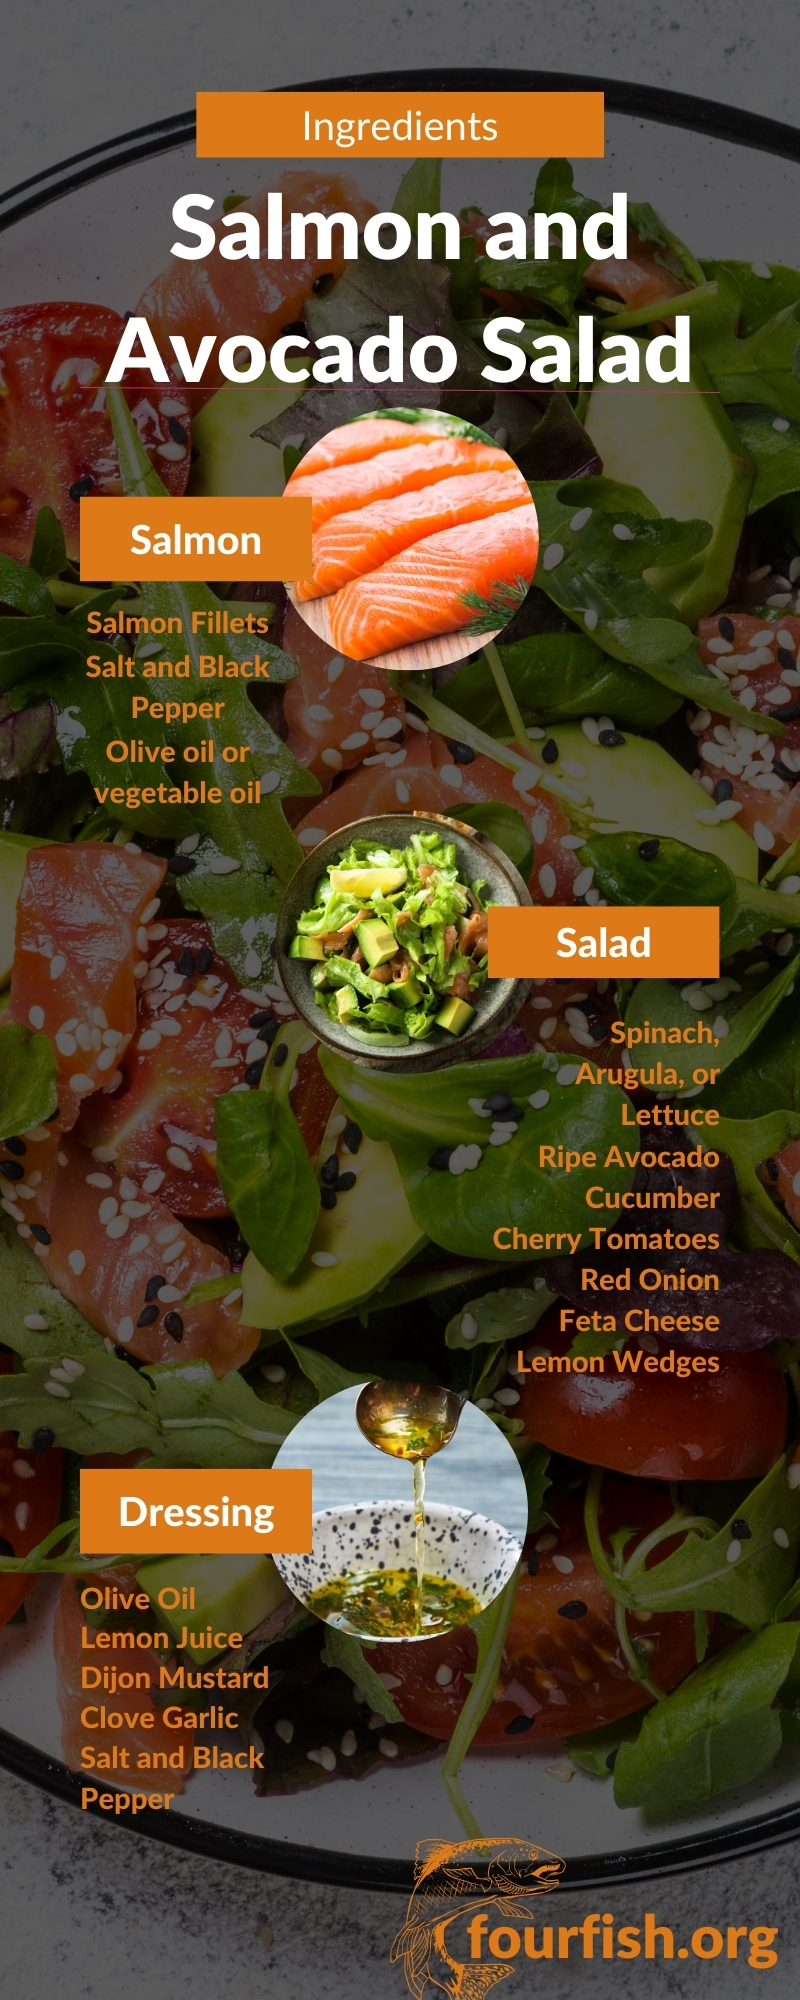 Salmon and Avocado Salad Ingredients Infographic